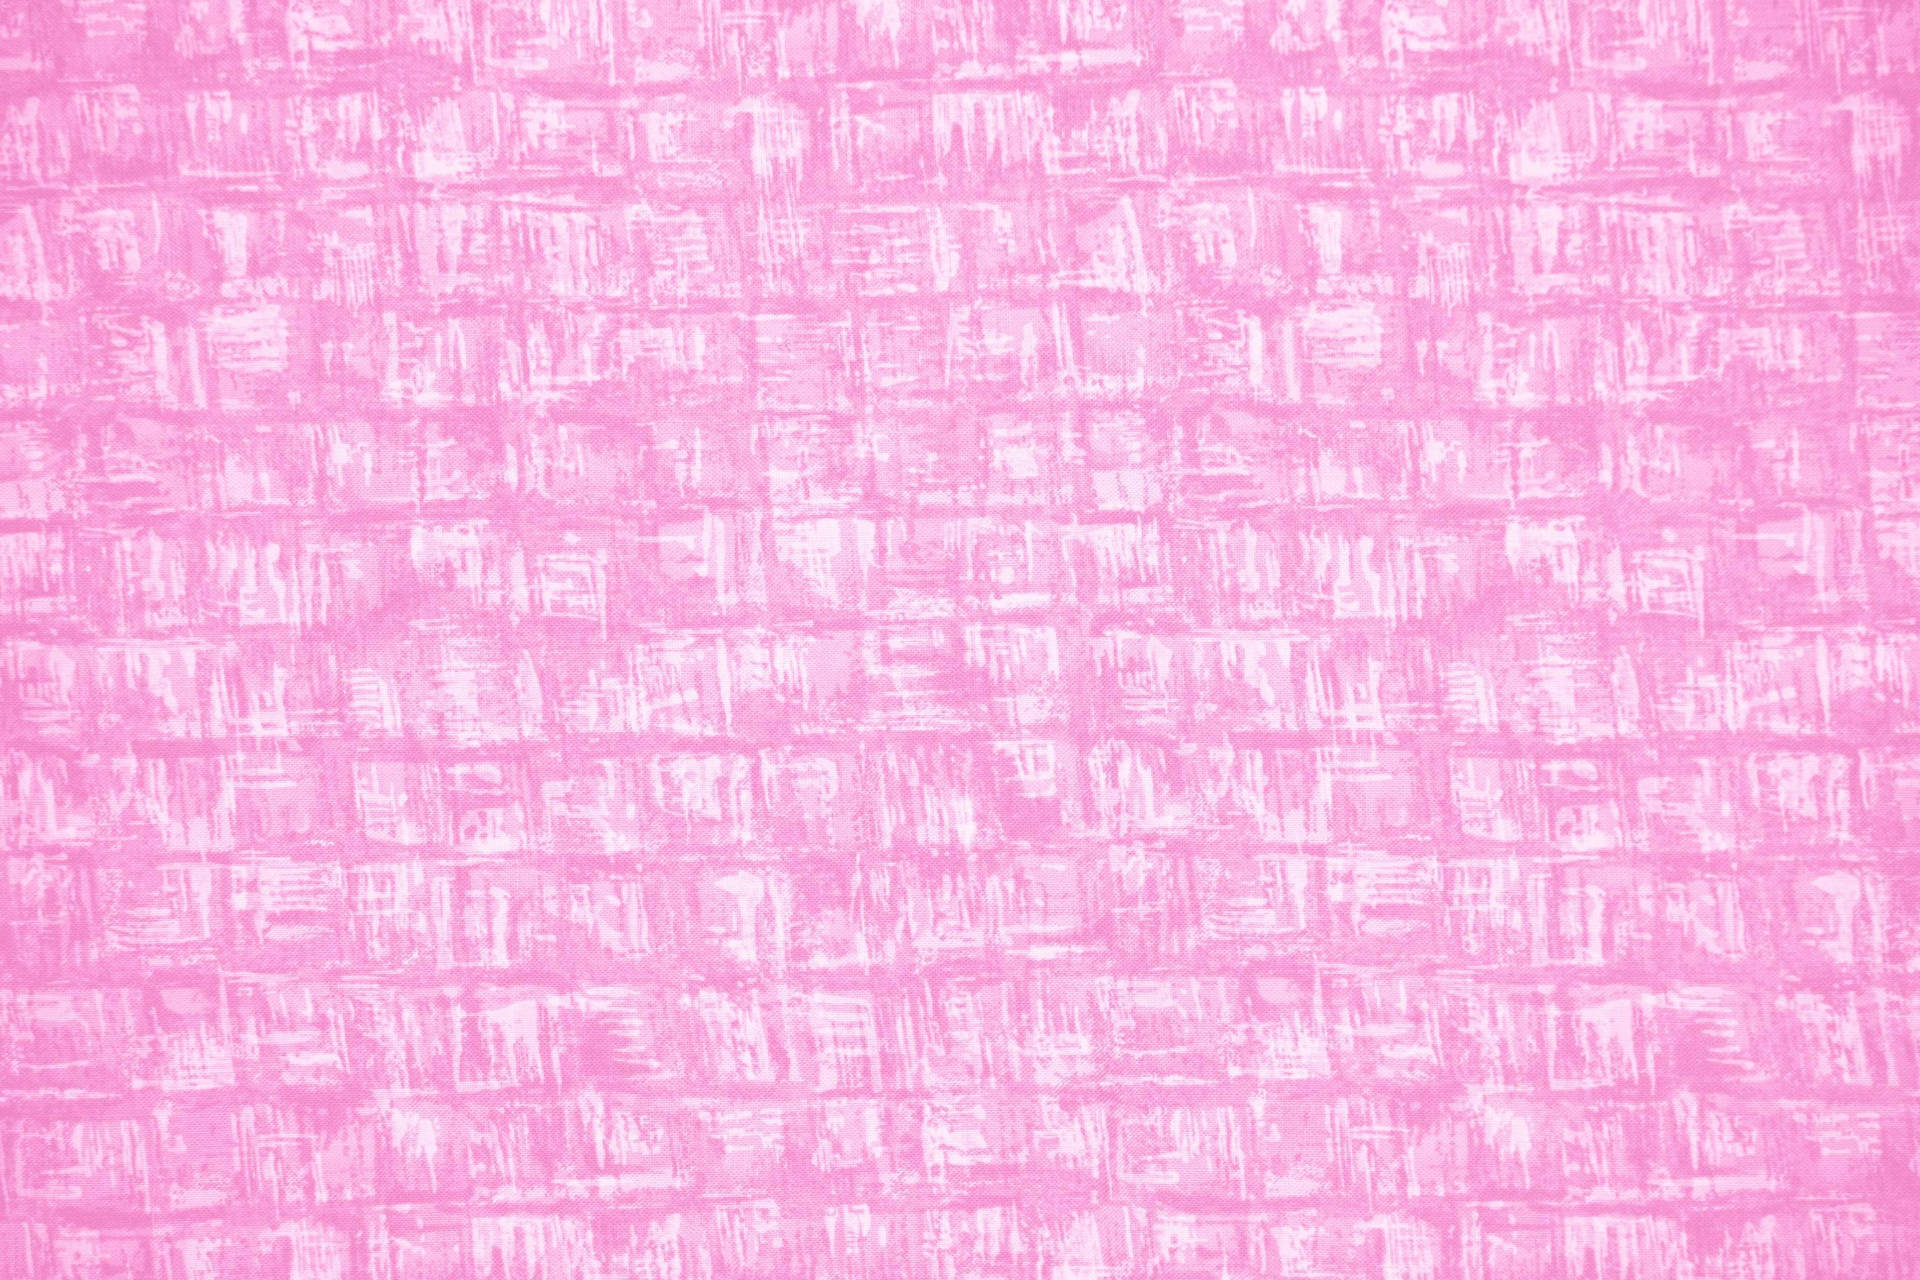 Light Pink Digital Art Picture